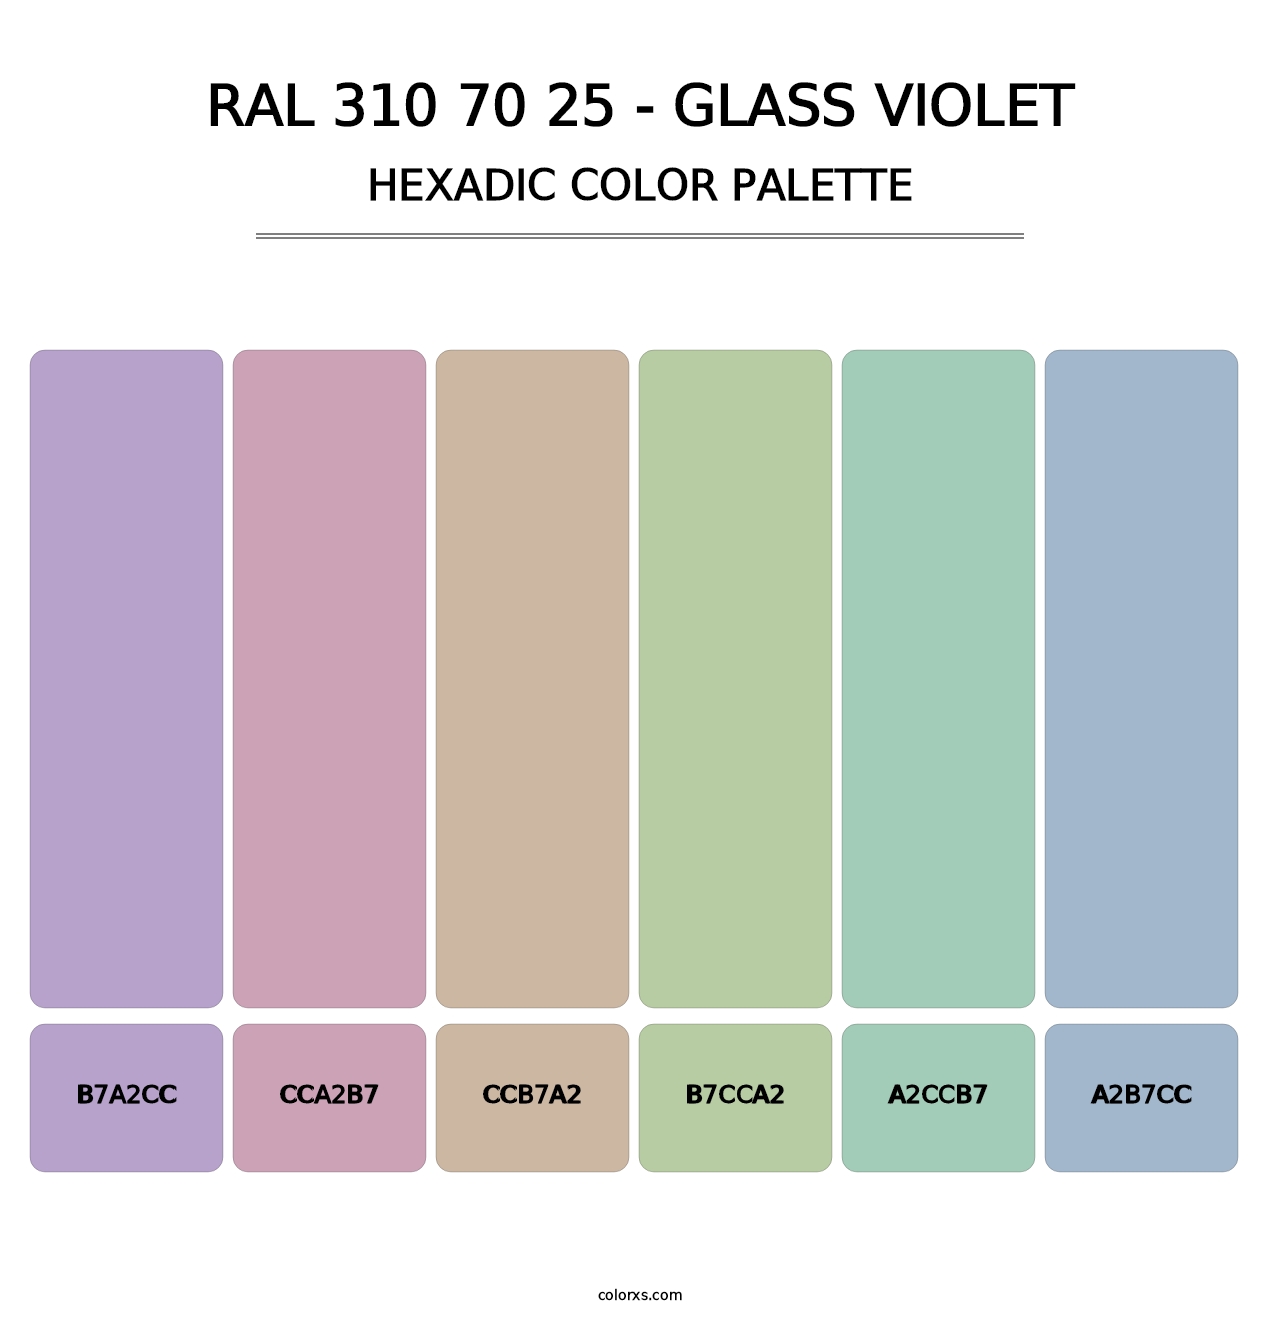 RAL 310 70 25 - Glass Violet - Hexadic Color Palette